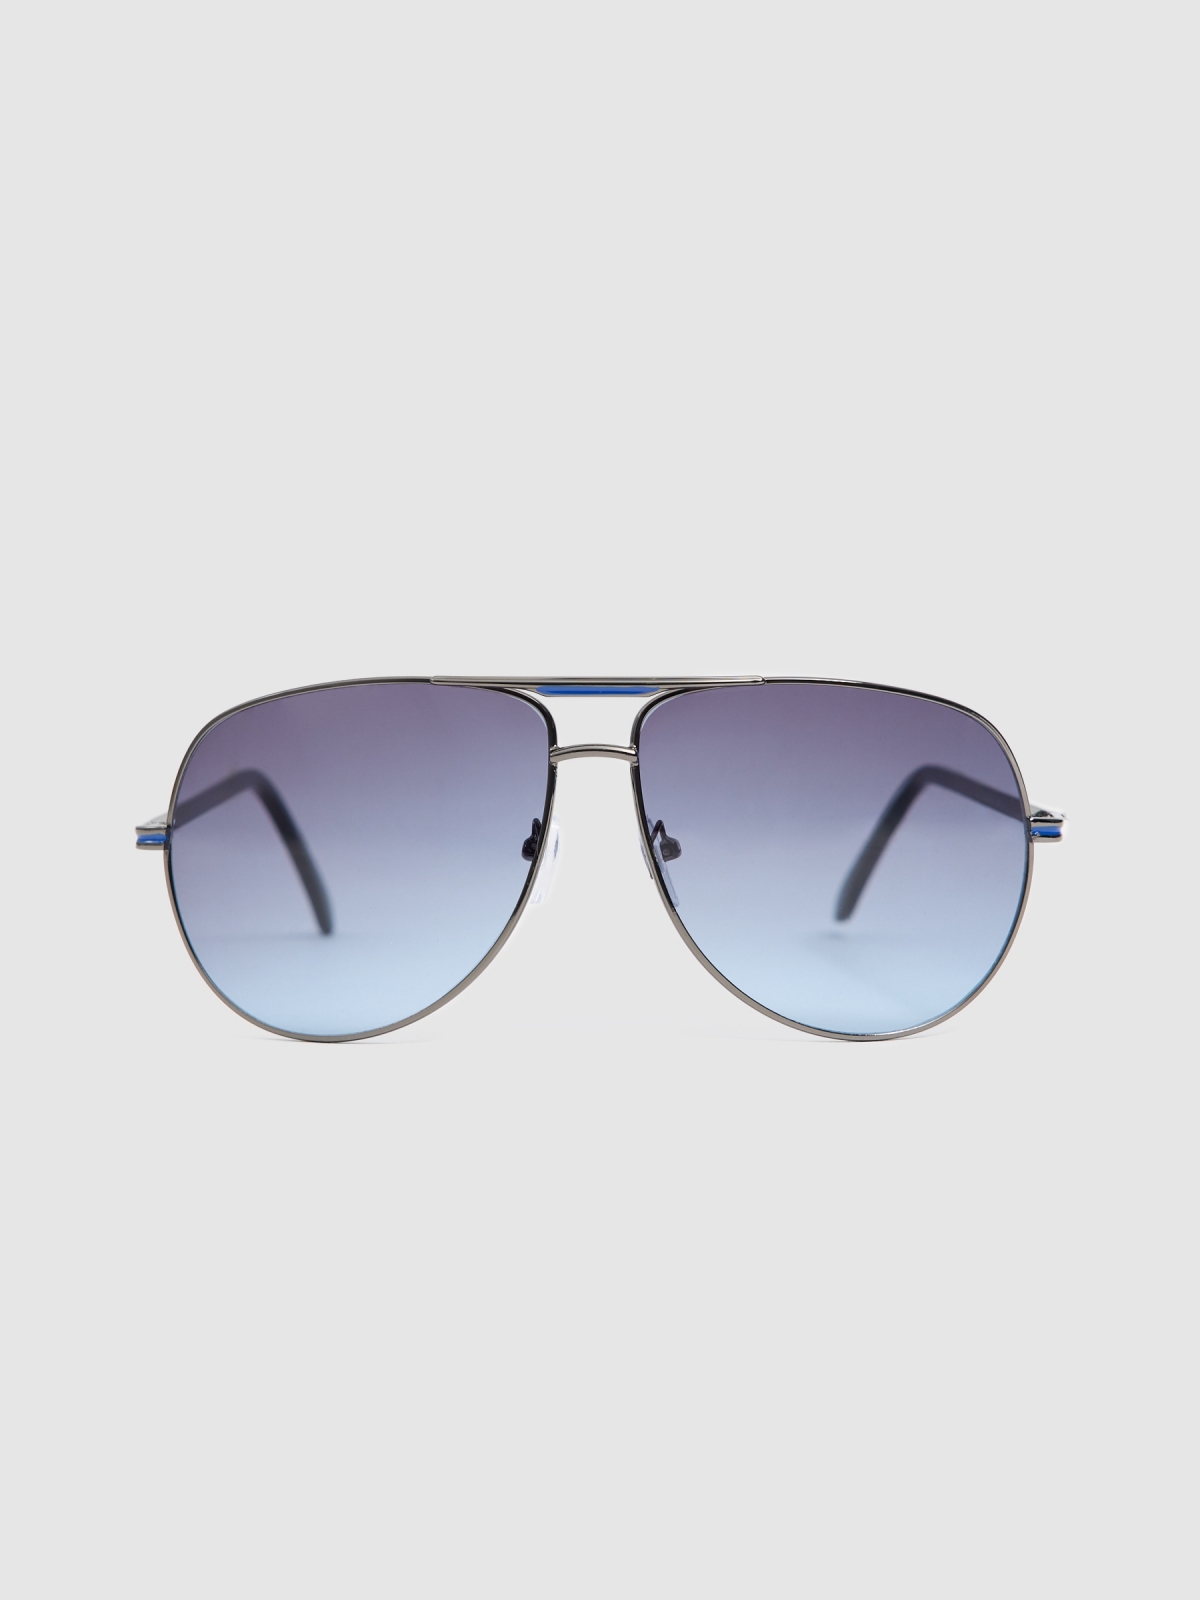 Metallic aviator sunglasses blue